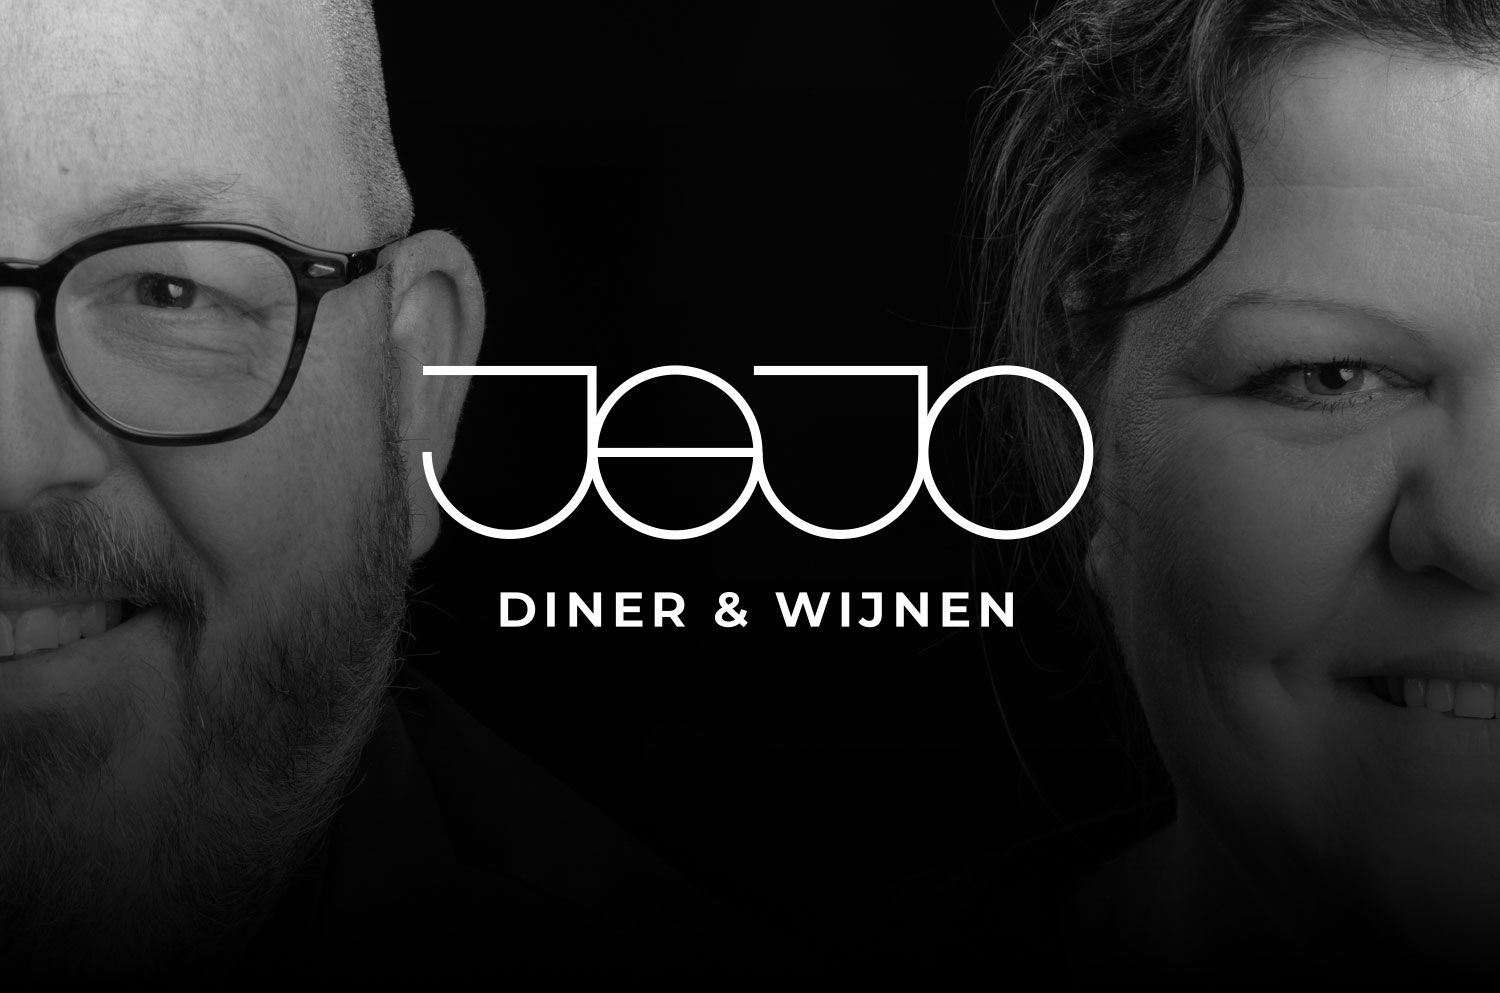 Jejo Dinner Wijnen Marketing Branding Webdesign Campagne Veaudeville Marketing